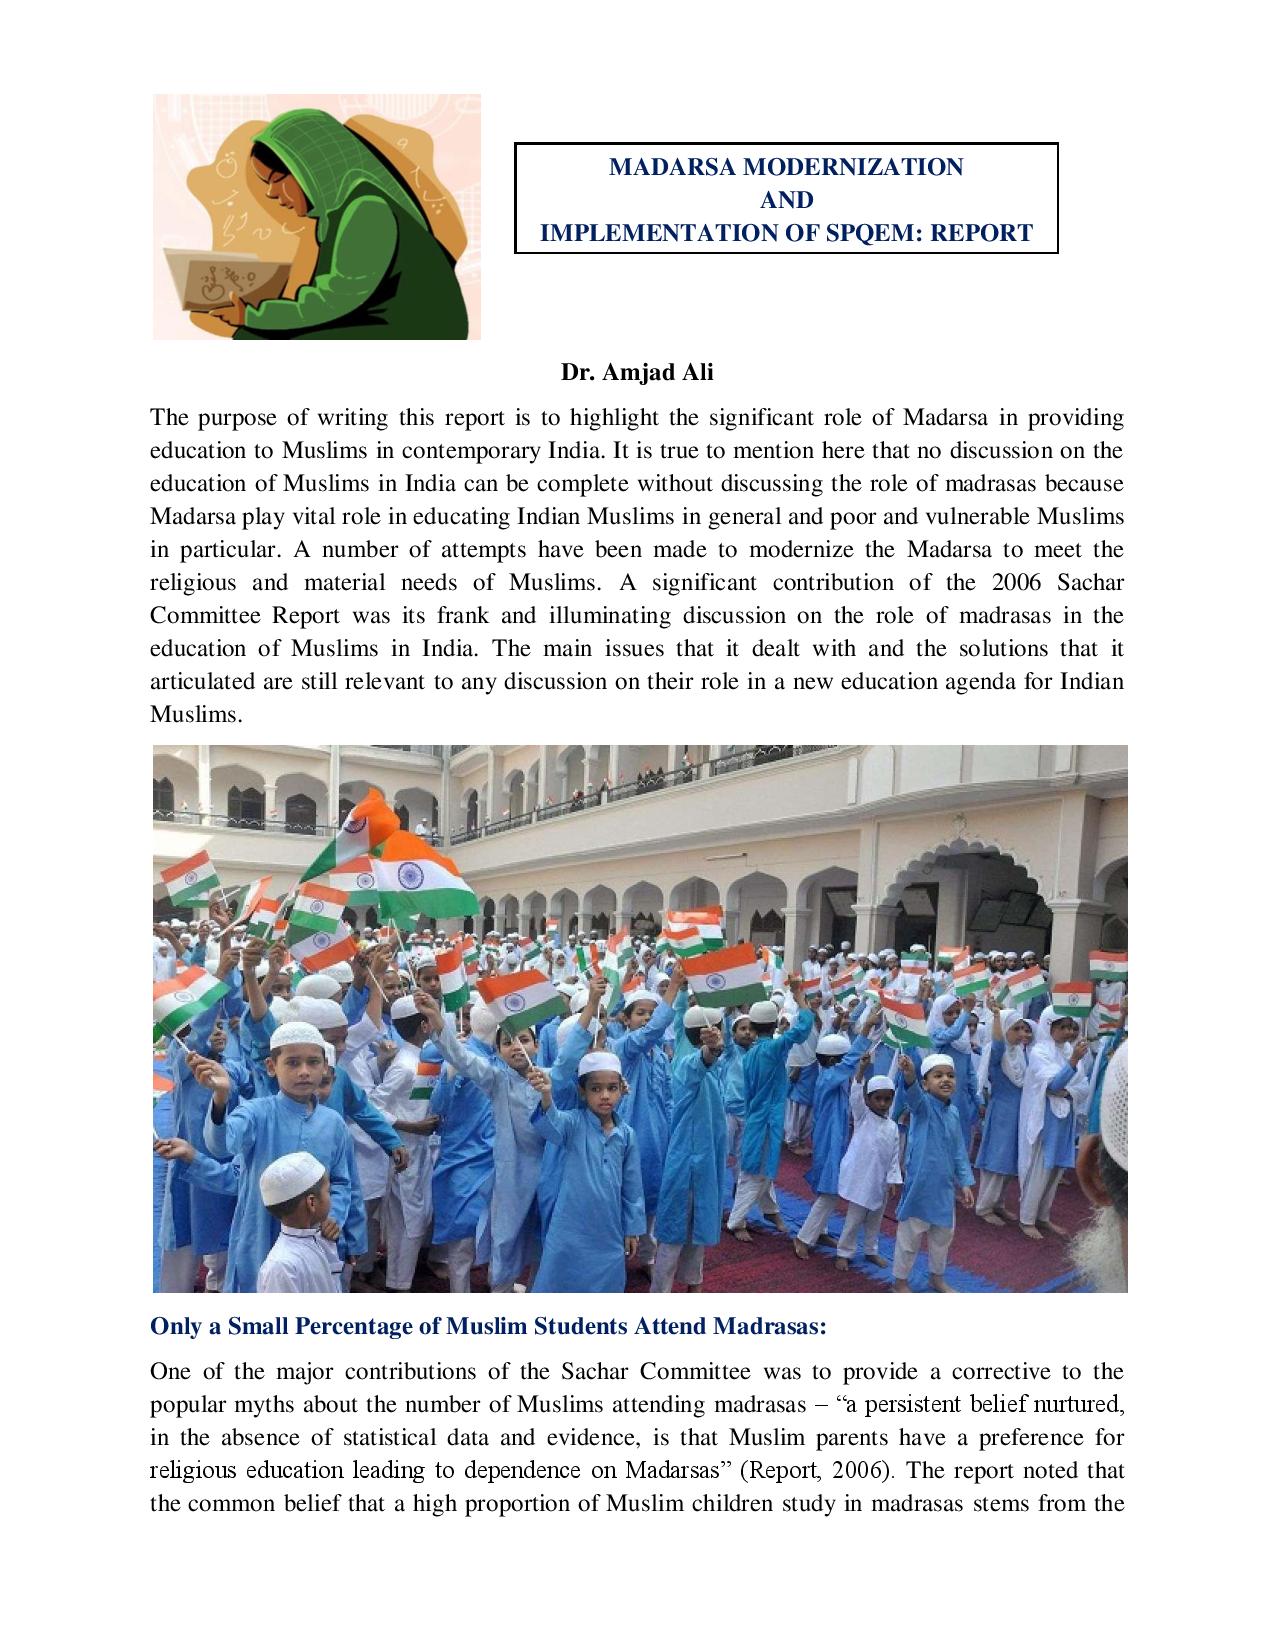 MADARSA MODERNIZATION AND IMPLEMENTATION OF SPQEM: REPORT